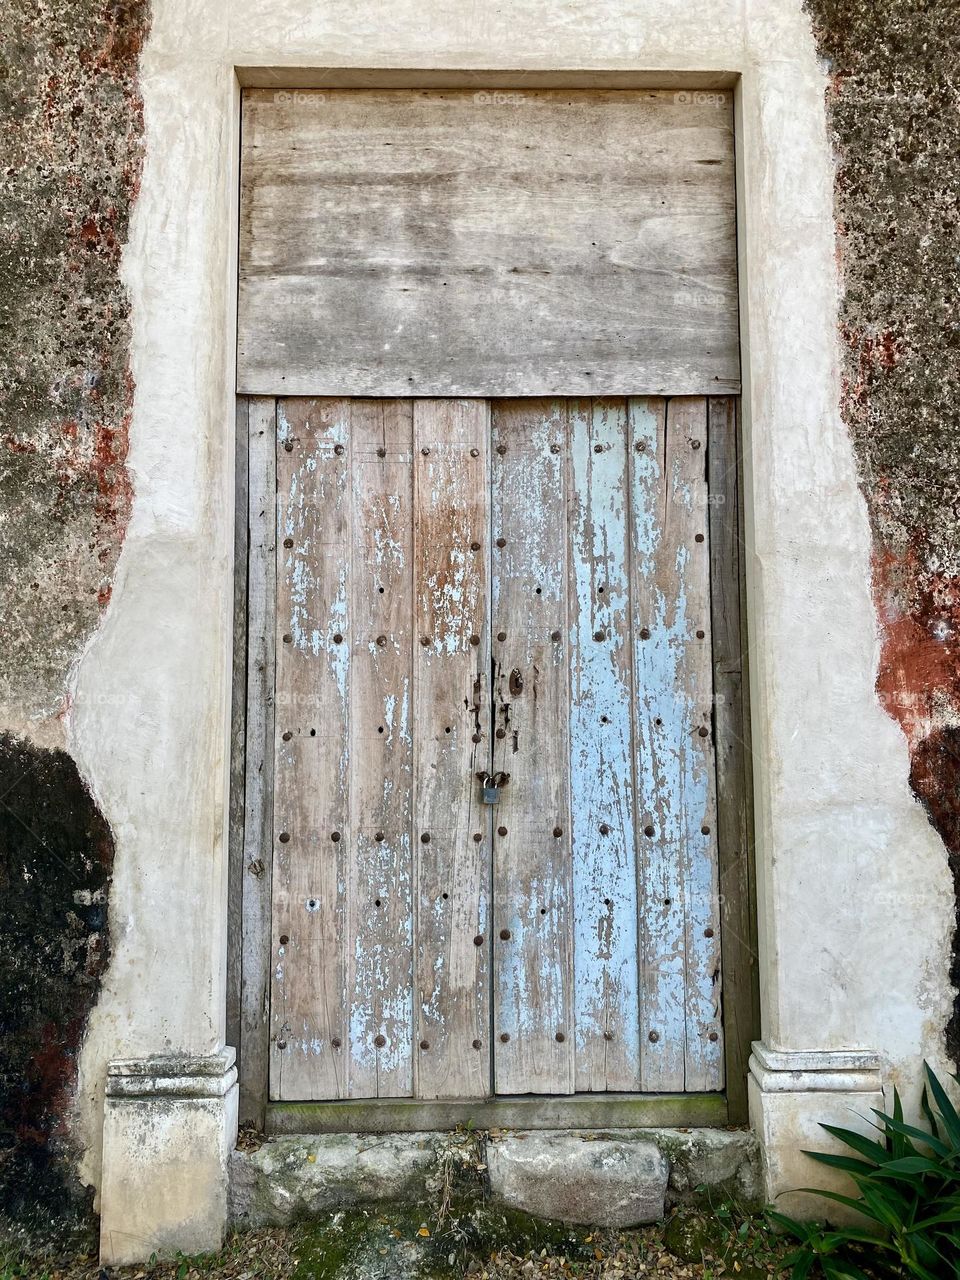 A painted wooden door in an old Spanish hacienda